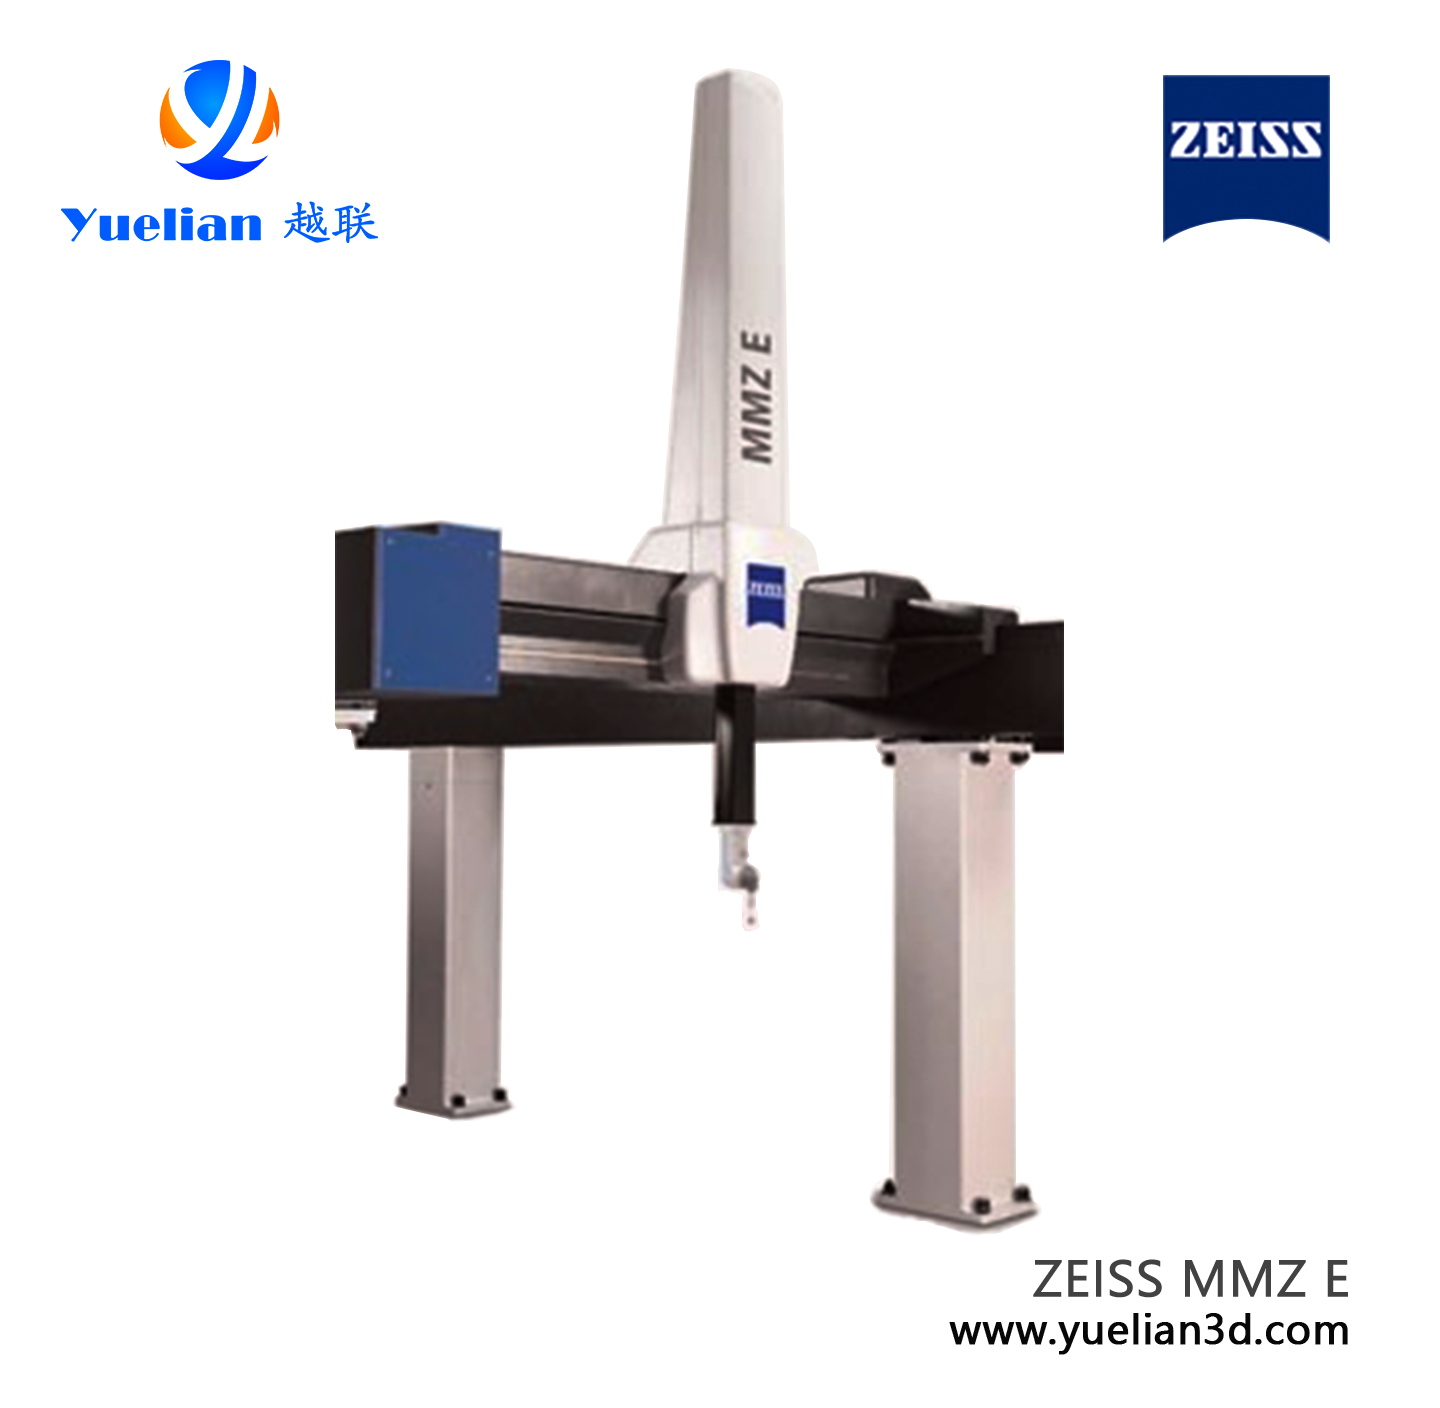 ZEISS MMZ E 龙门式三坐标测量机